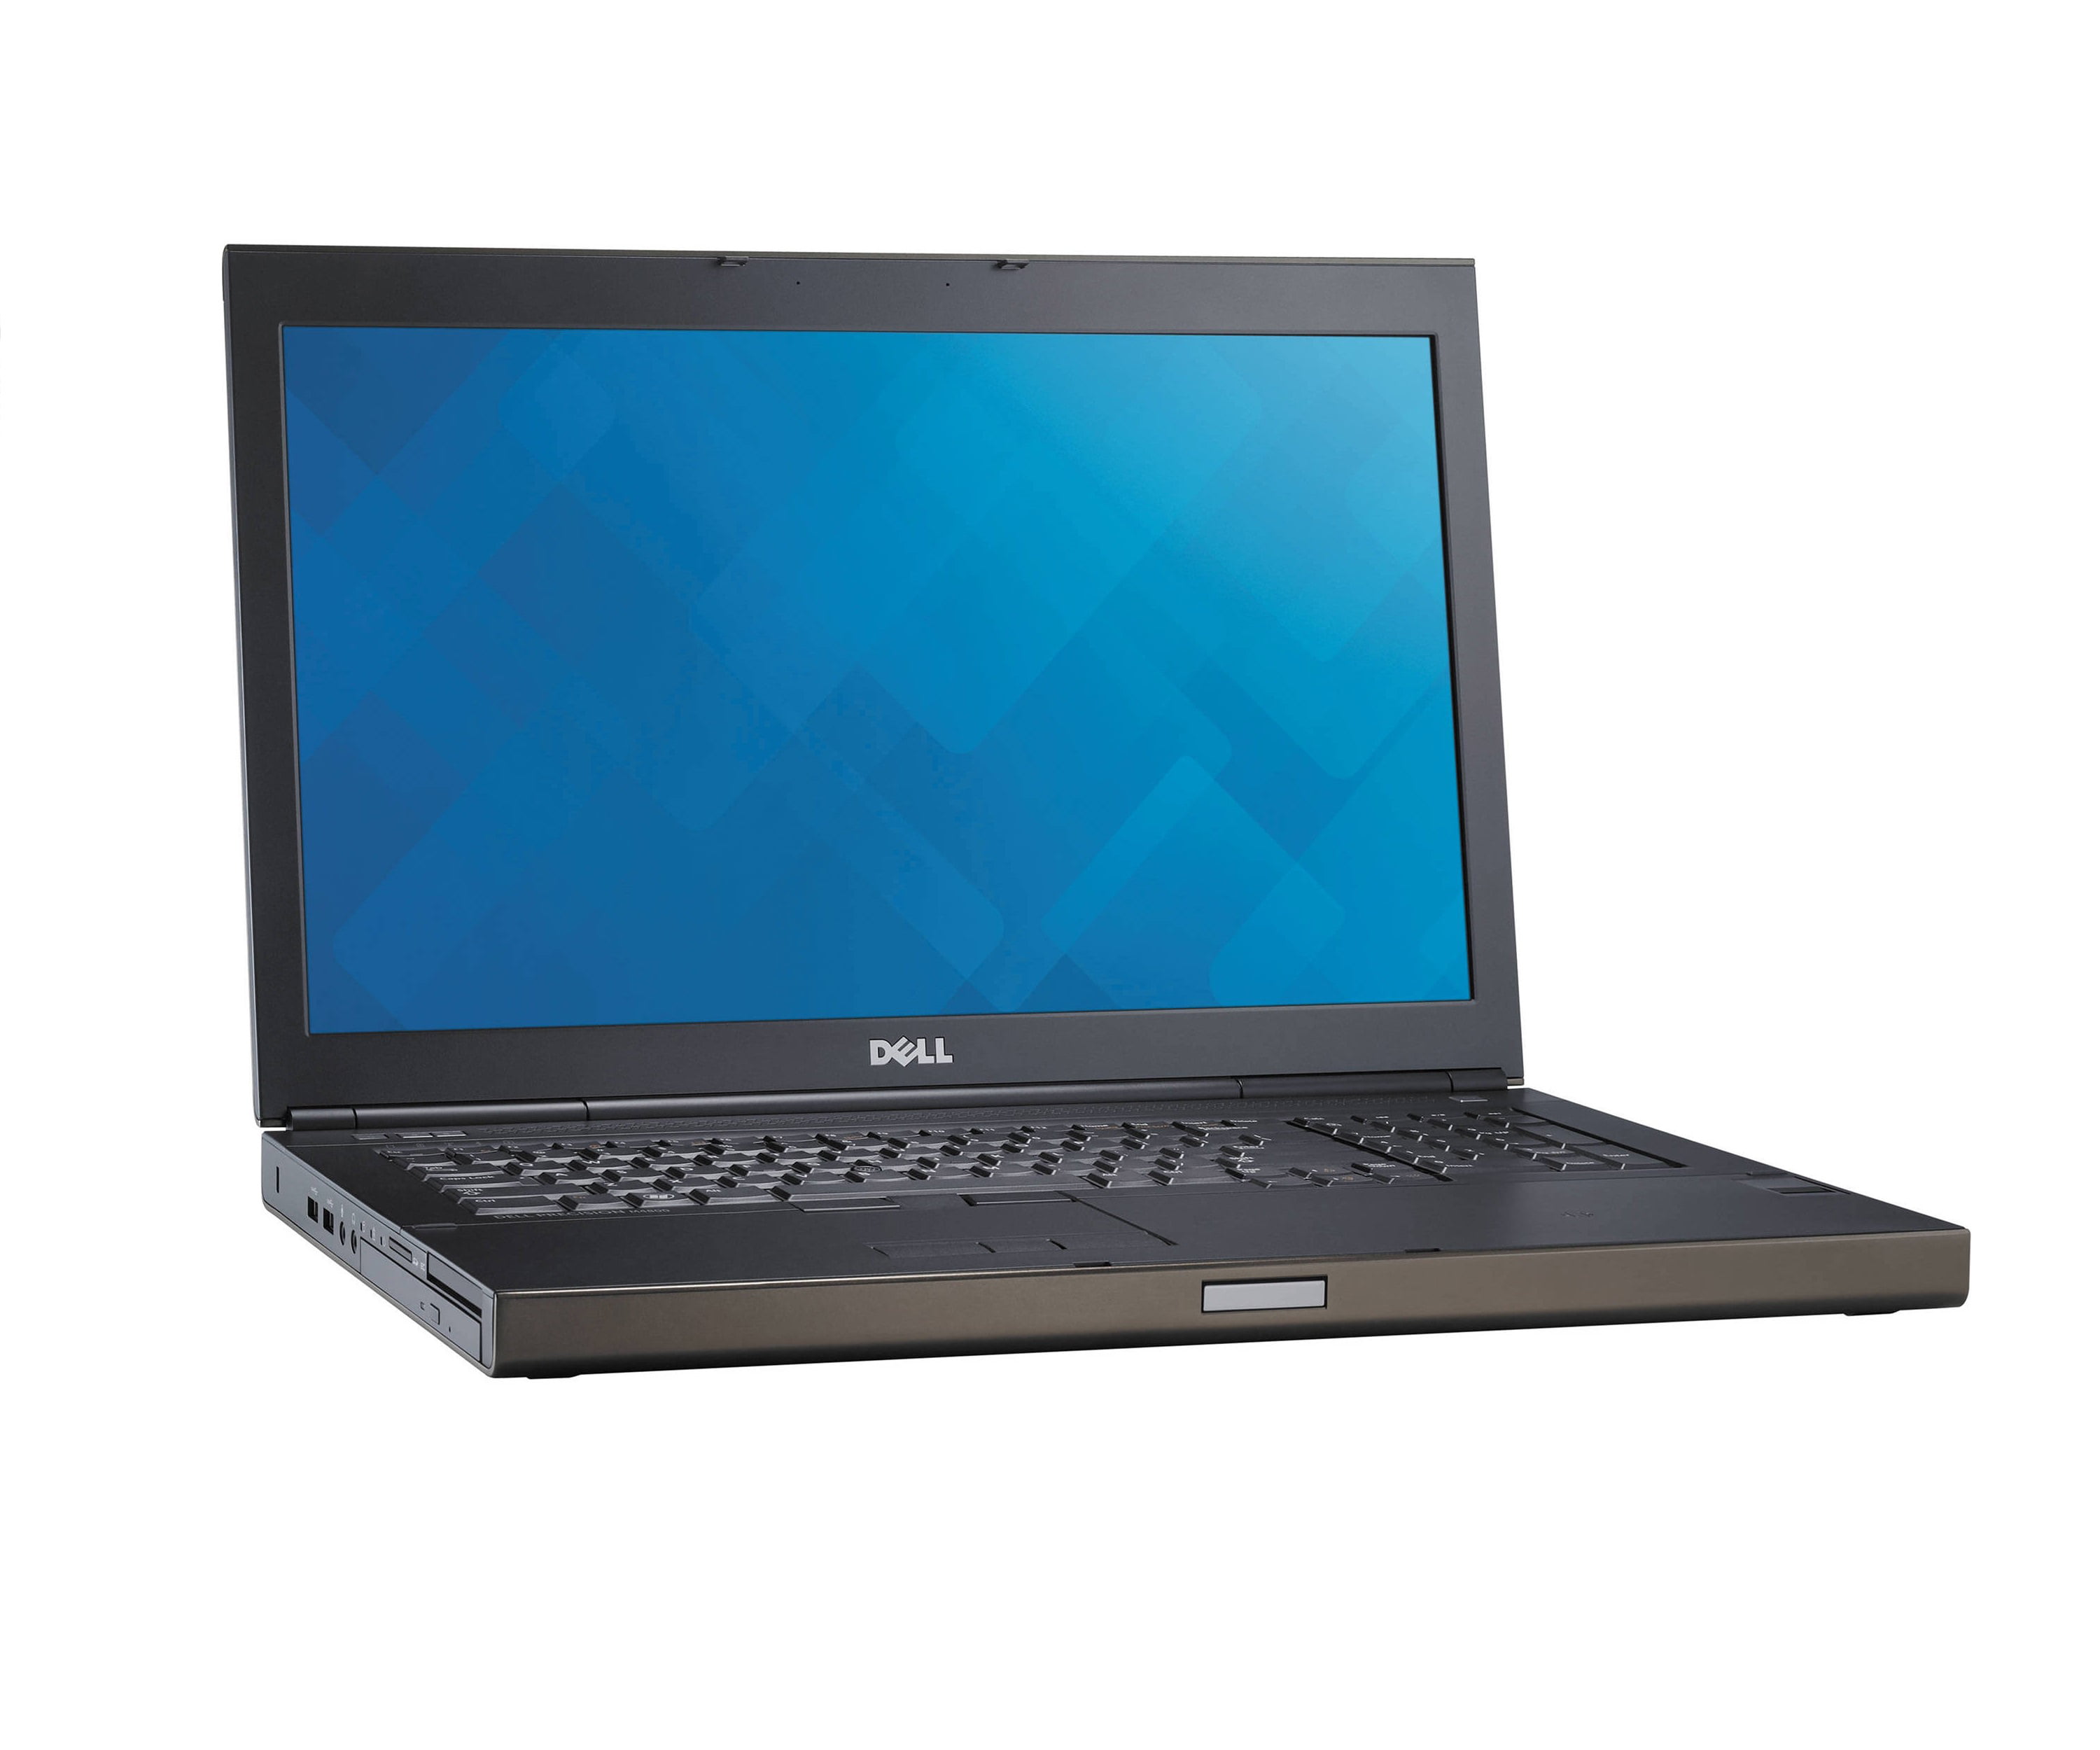 Restored 17.3-inch Dell M6800 Workstation Laptop, i7 Processor, 16GB, 240GB SSD, Windows 10 (Refurbished) - Walmart.com